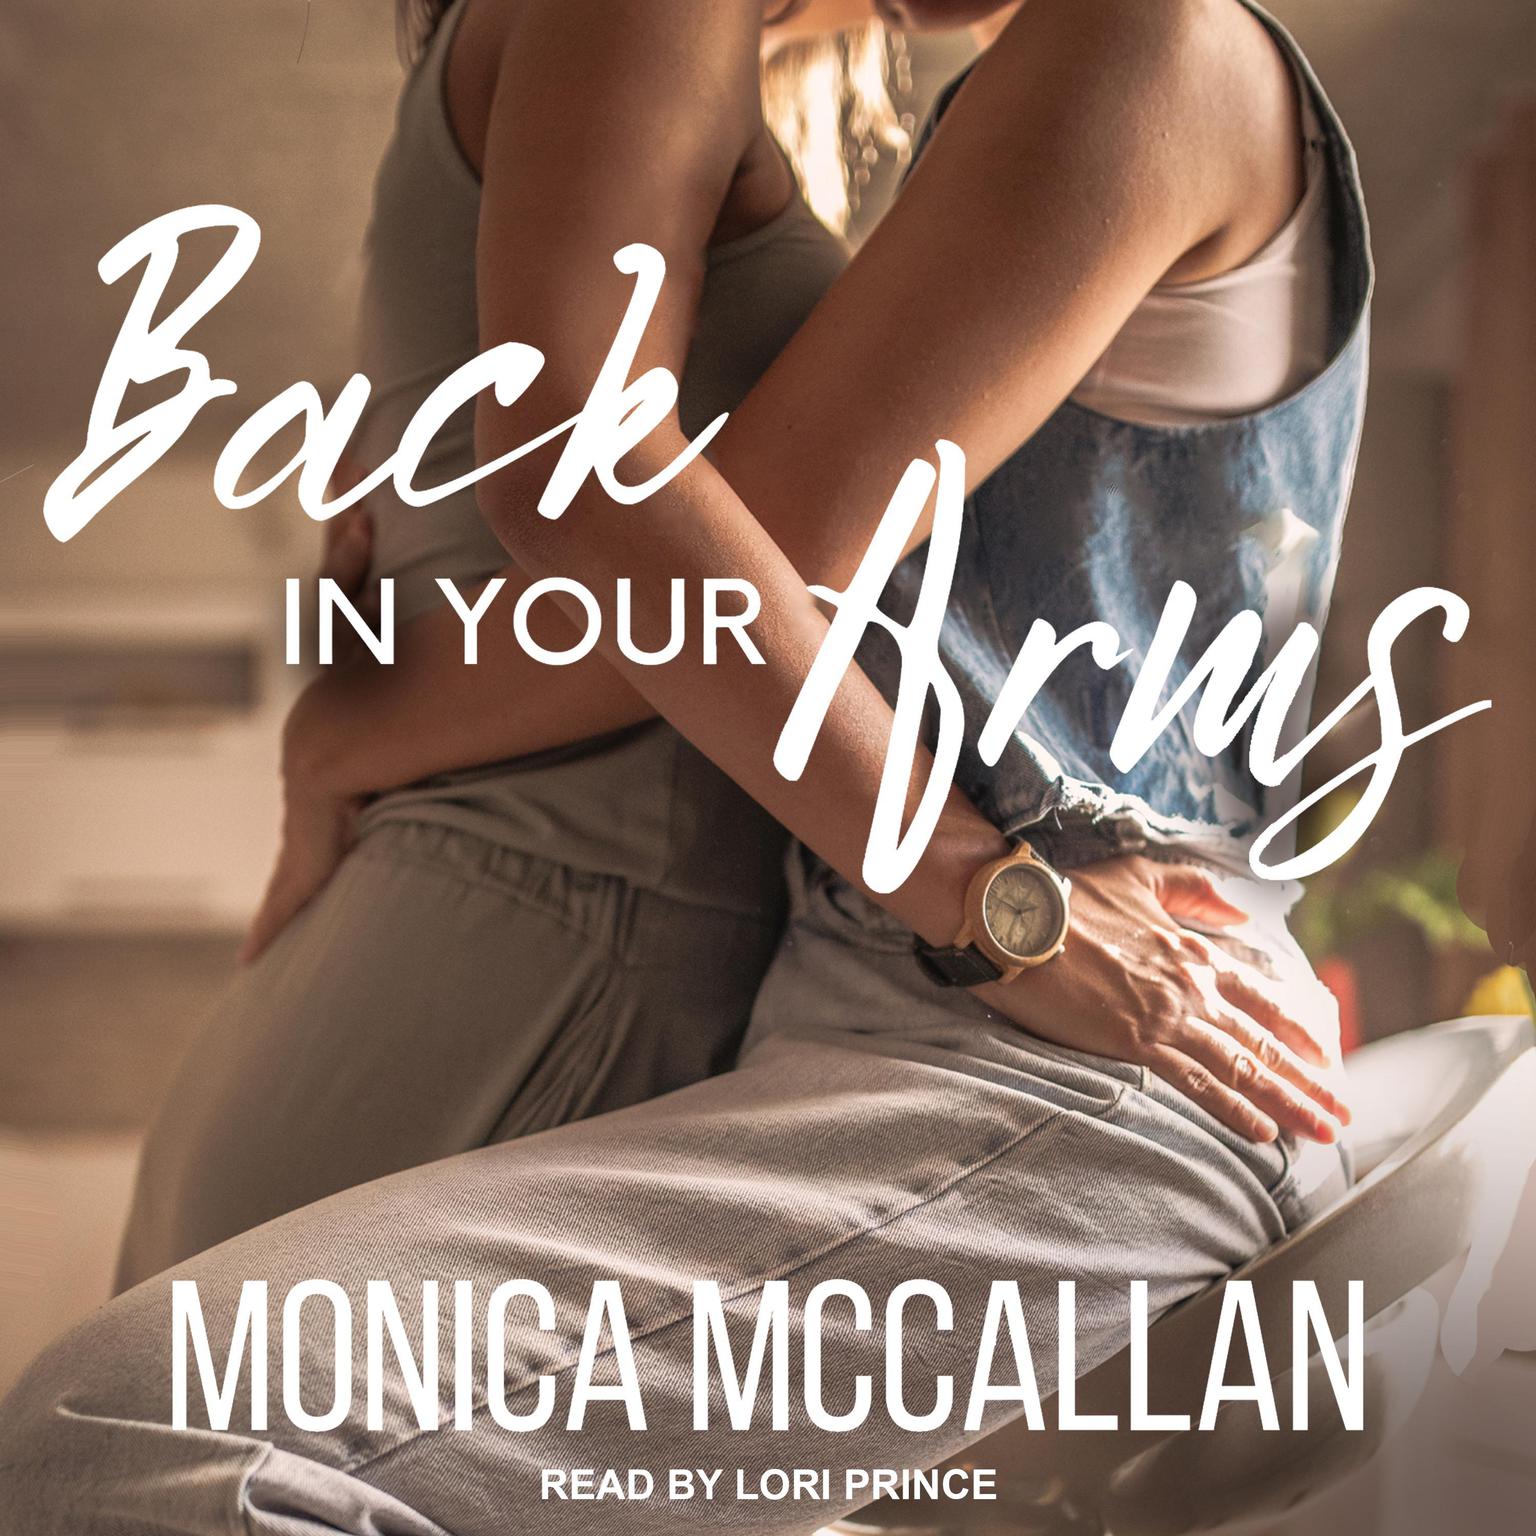 Monica McCallan, Lori Prince: Back in Your Arms (AudiobookFormat, 2021, -)